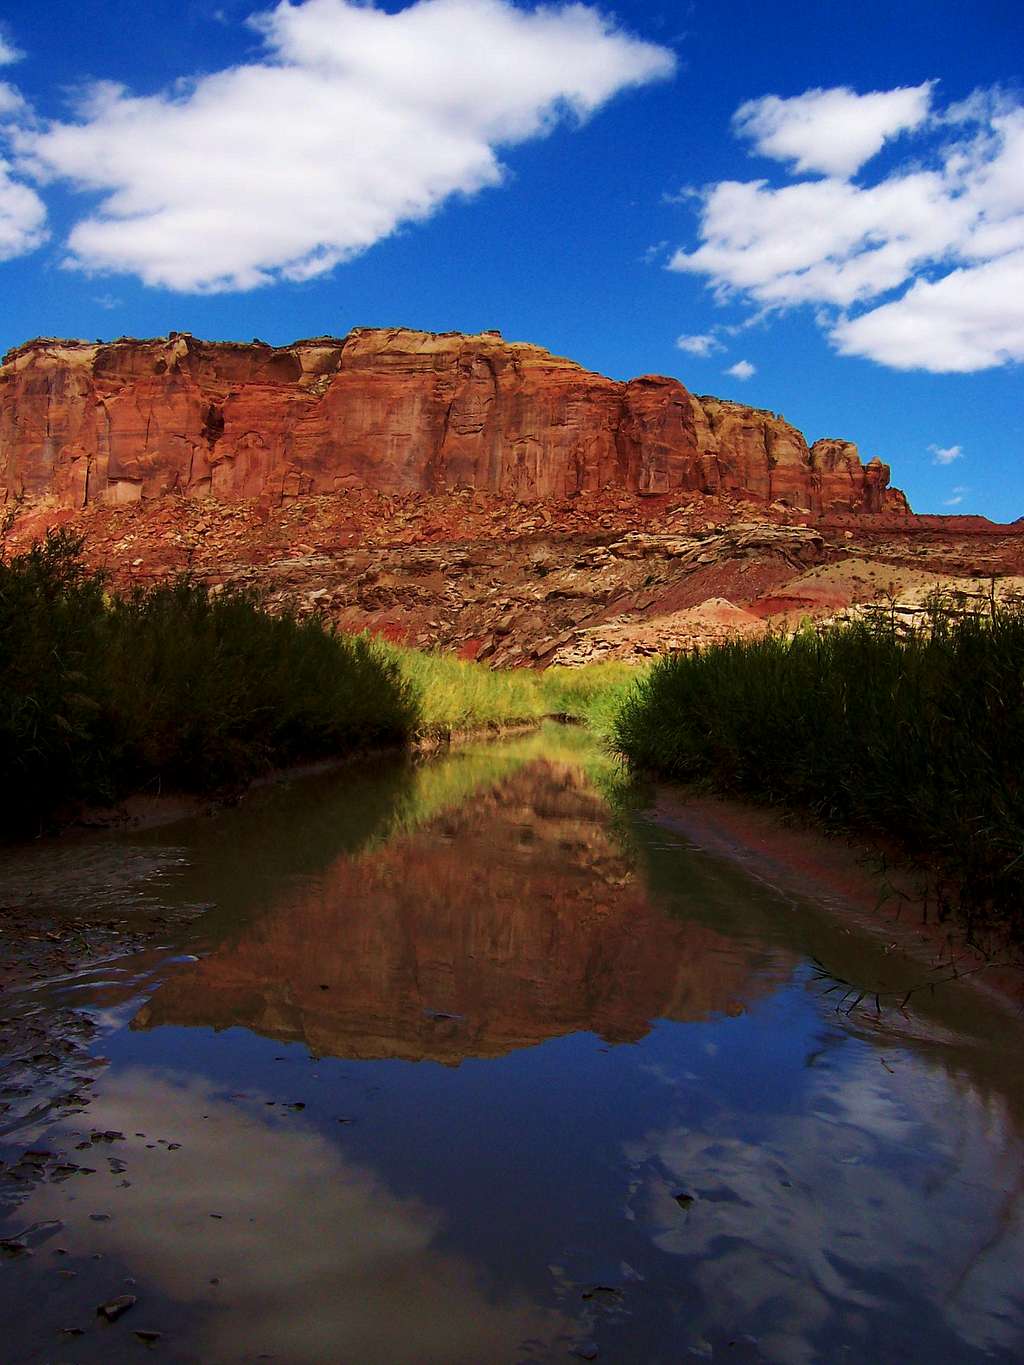 Reflection in Muddy Creek